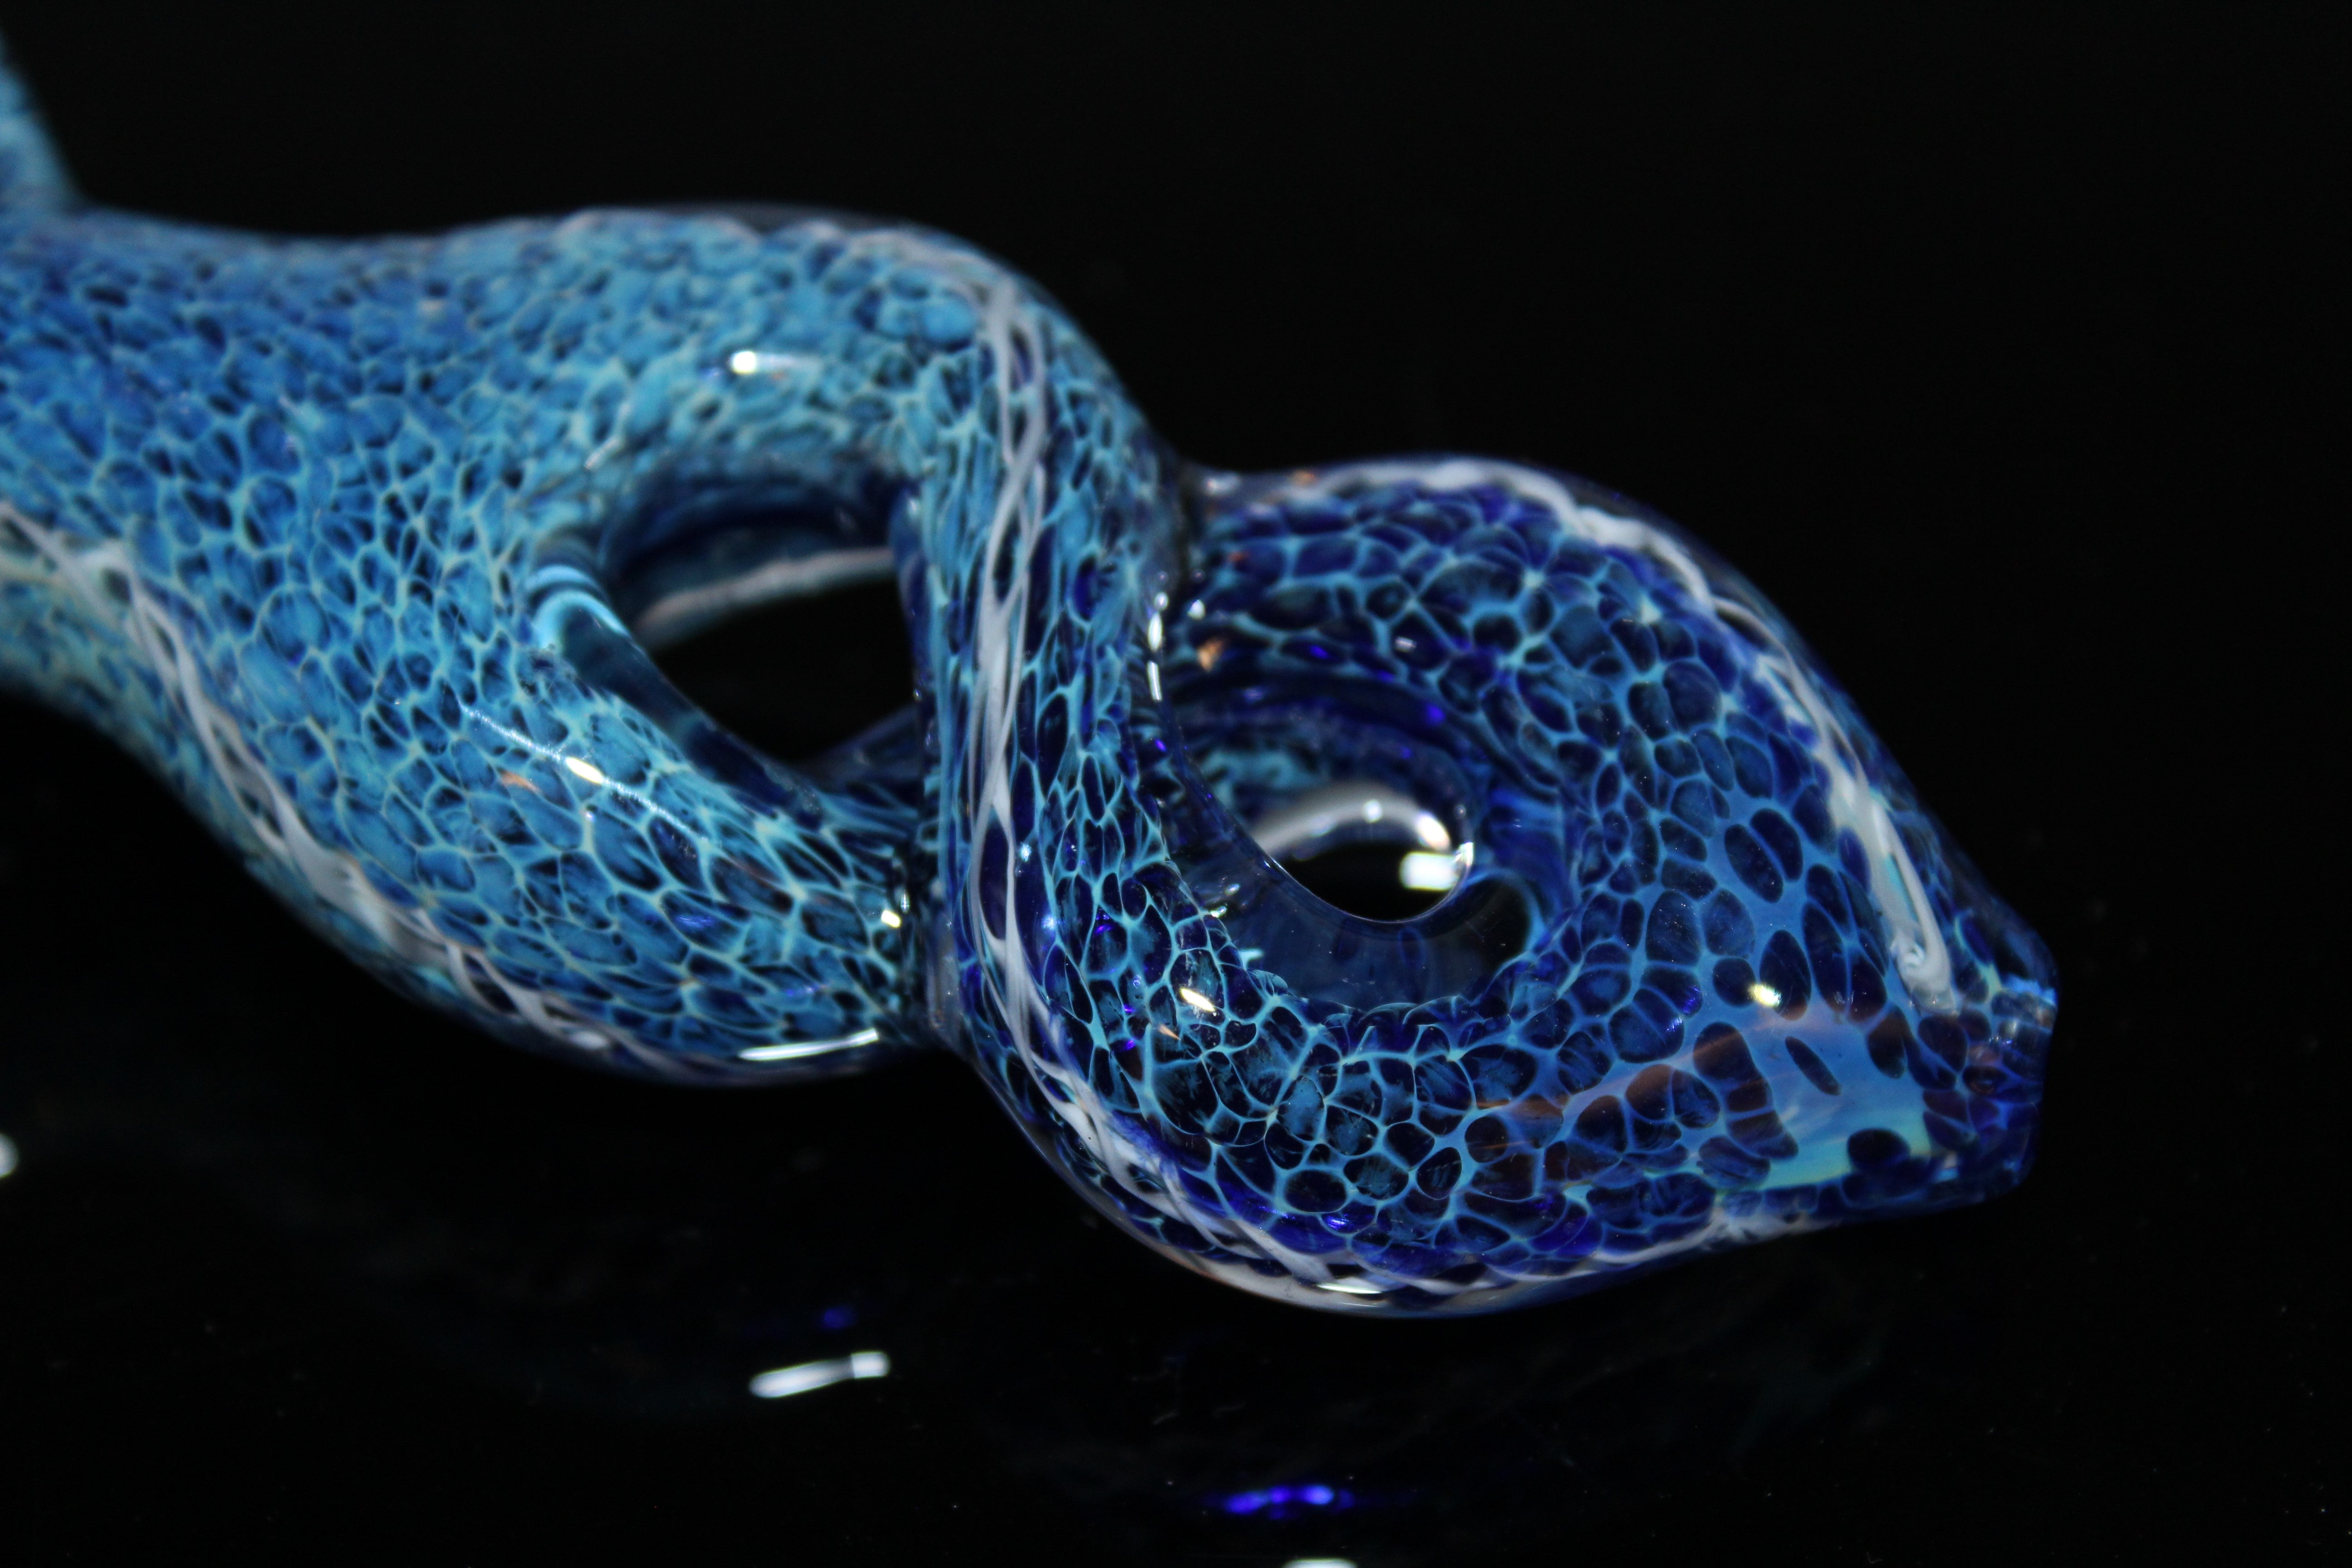 INFINITY BLUE LEOPARD Tobacco Smoking Glass Pipe THICK TWIST glass